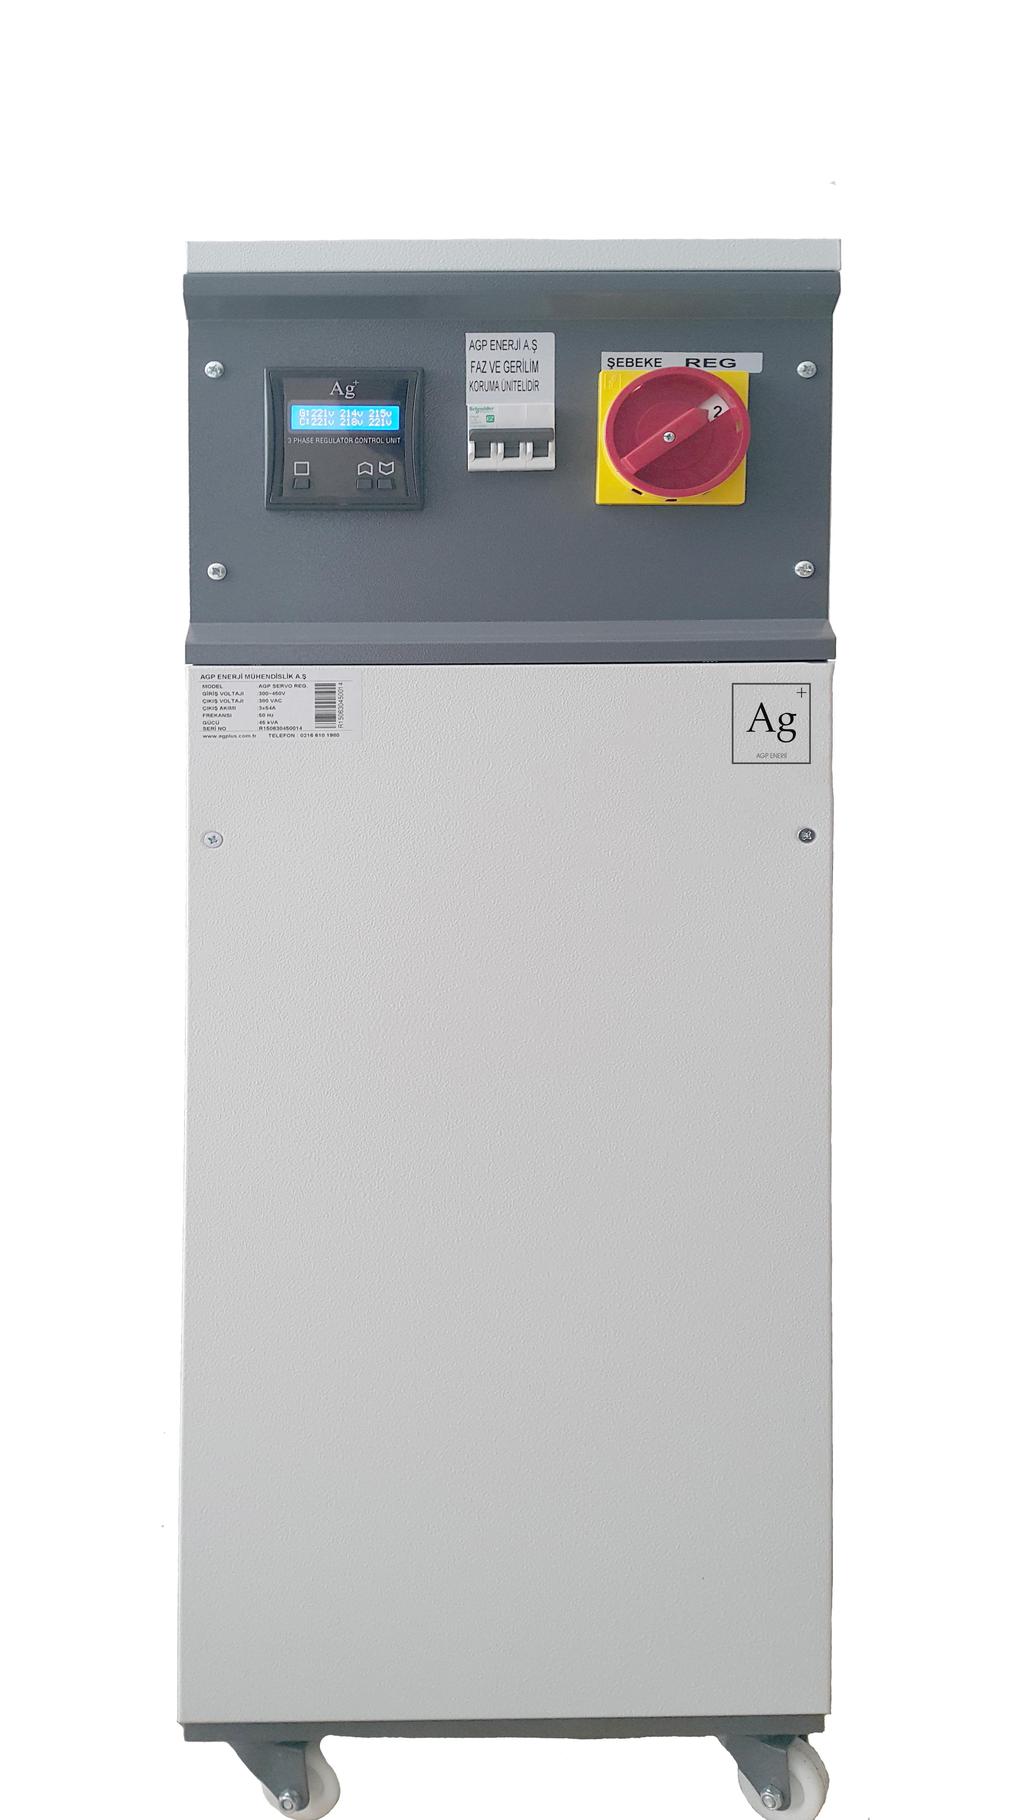 AGR 33 Mikro İşlemcili Voltaj Regülatörü Tam otomatik servo kontrol lü. 1 Adet ( dijital ) voltmetre Düzeltme ( kontrol ) hızı: 100 vac / sn.